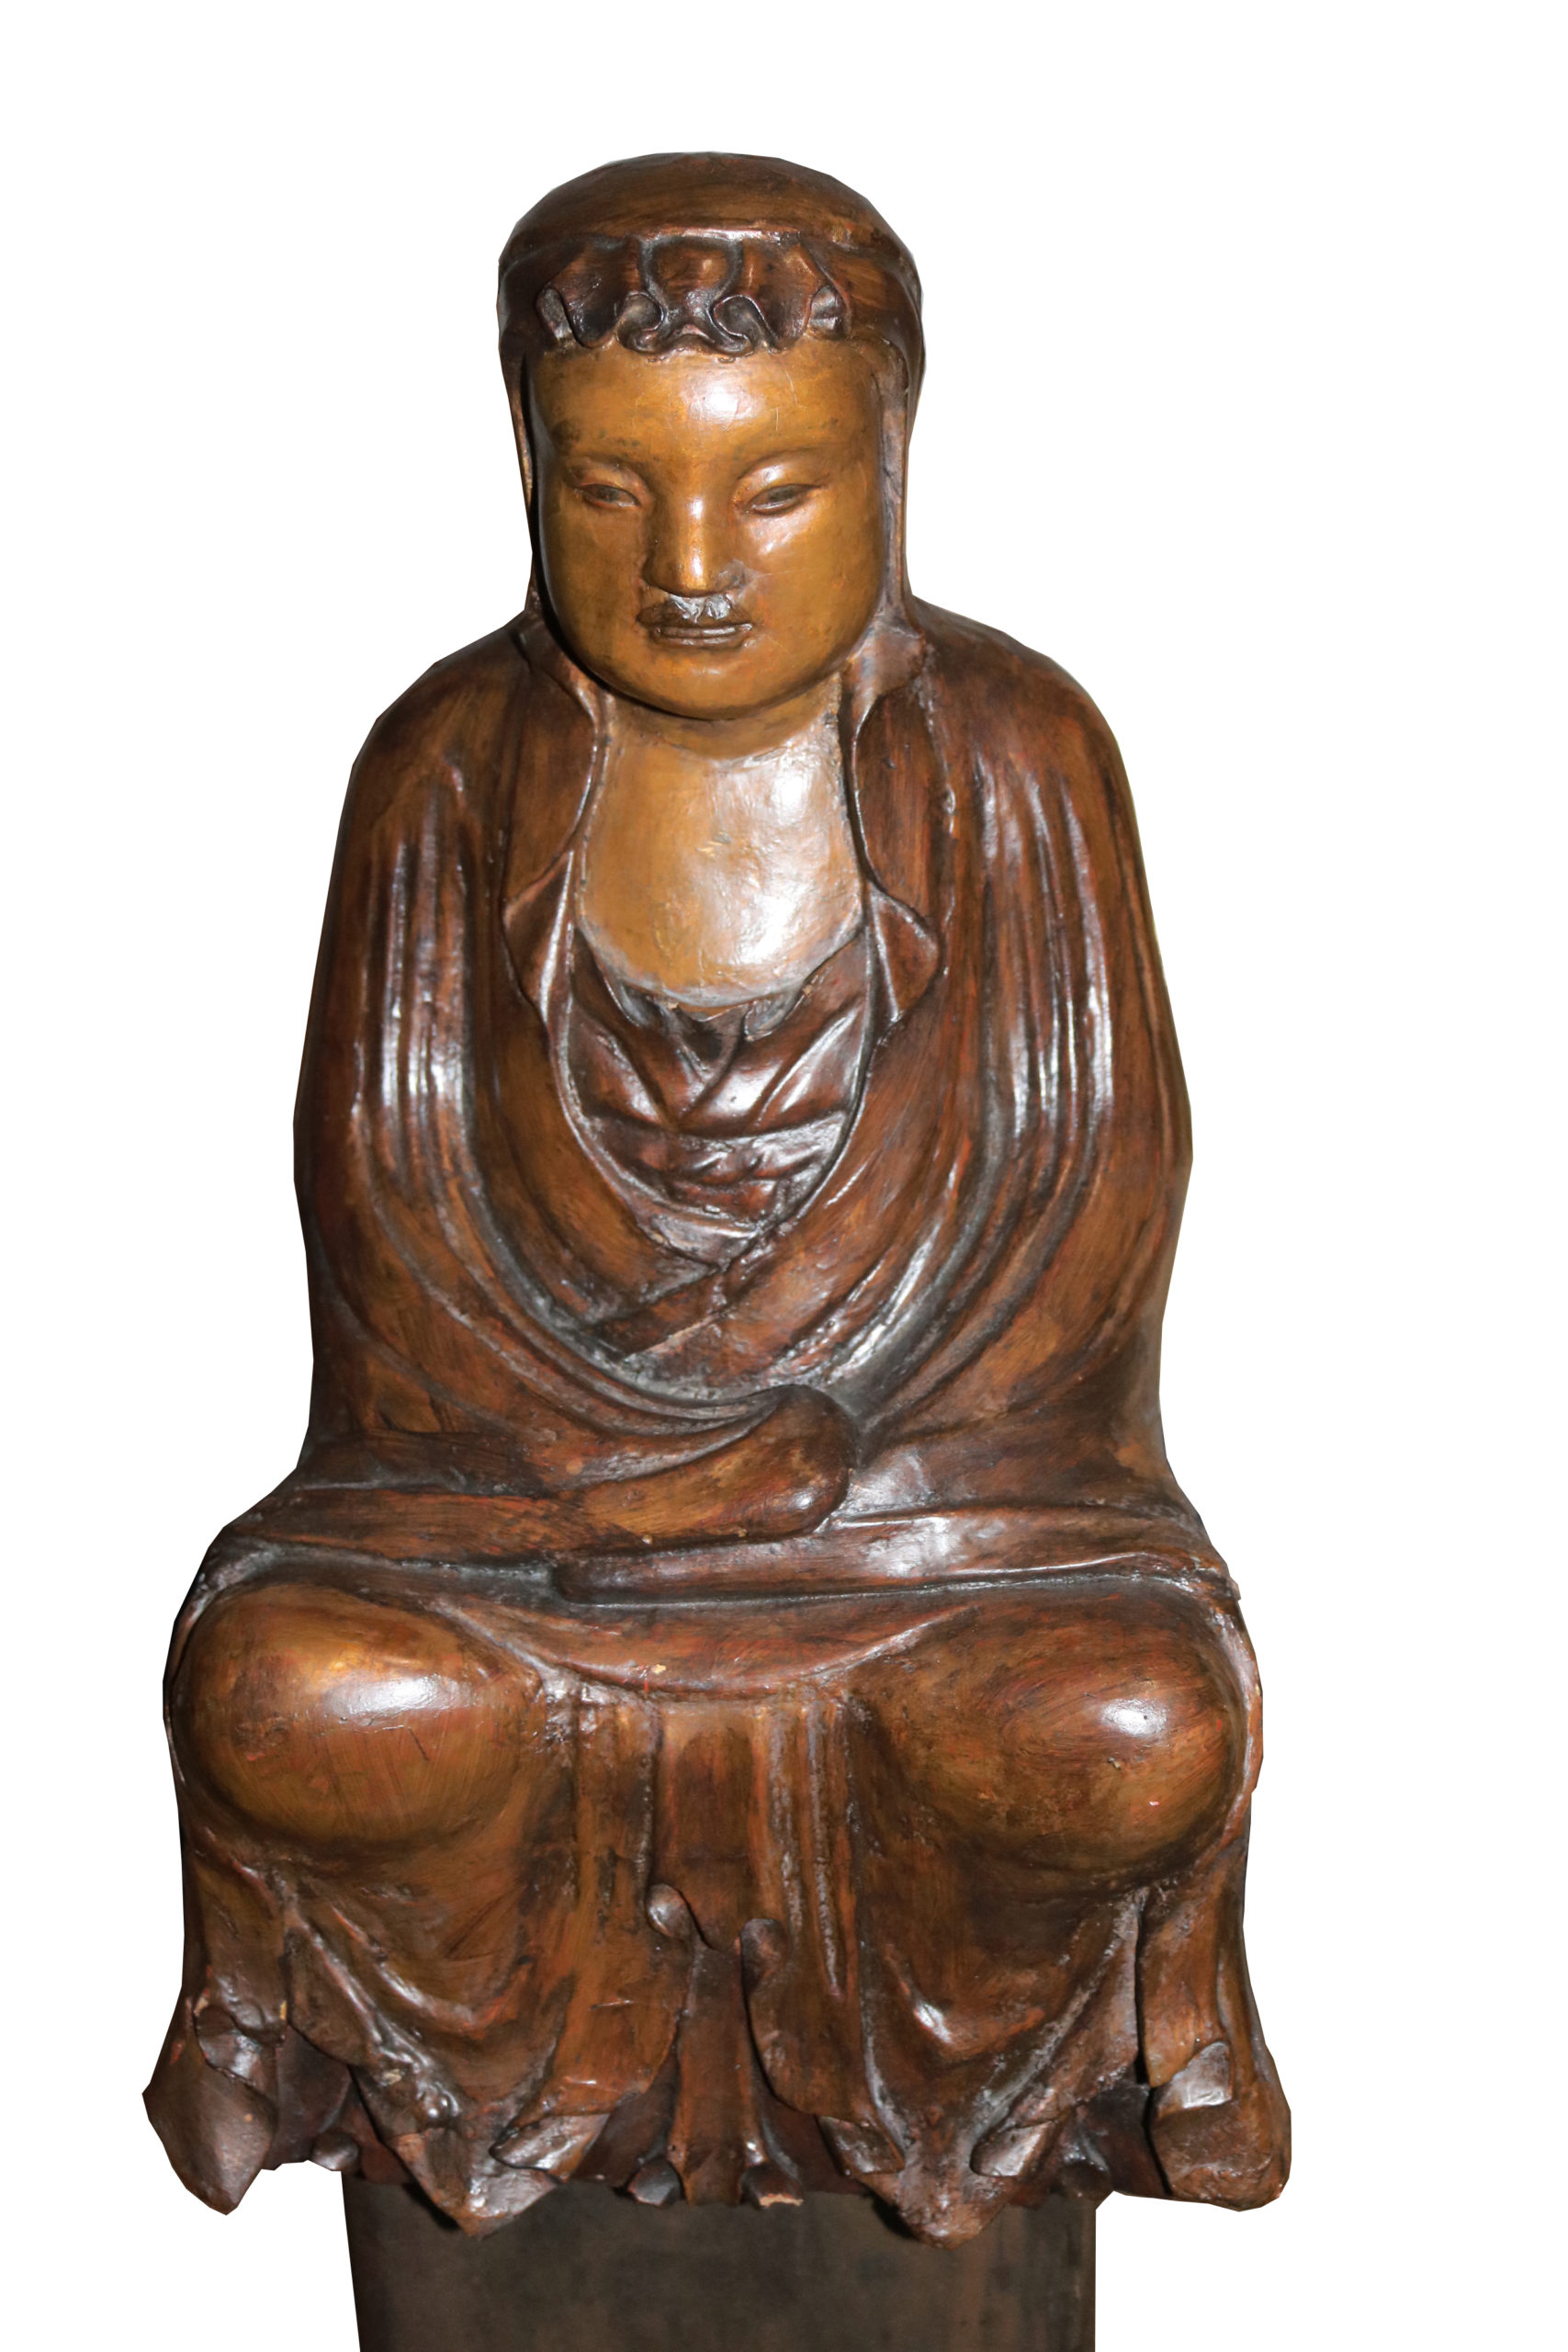 A 17th Century Asian Buddha Statue No. 4820